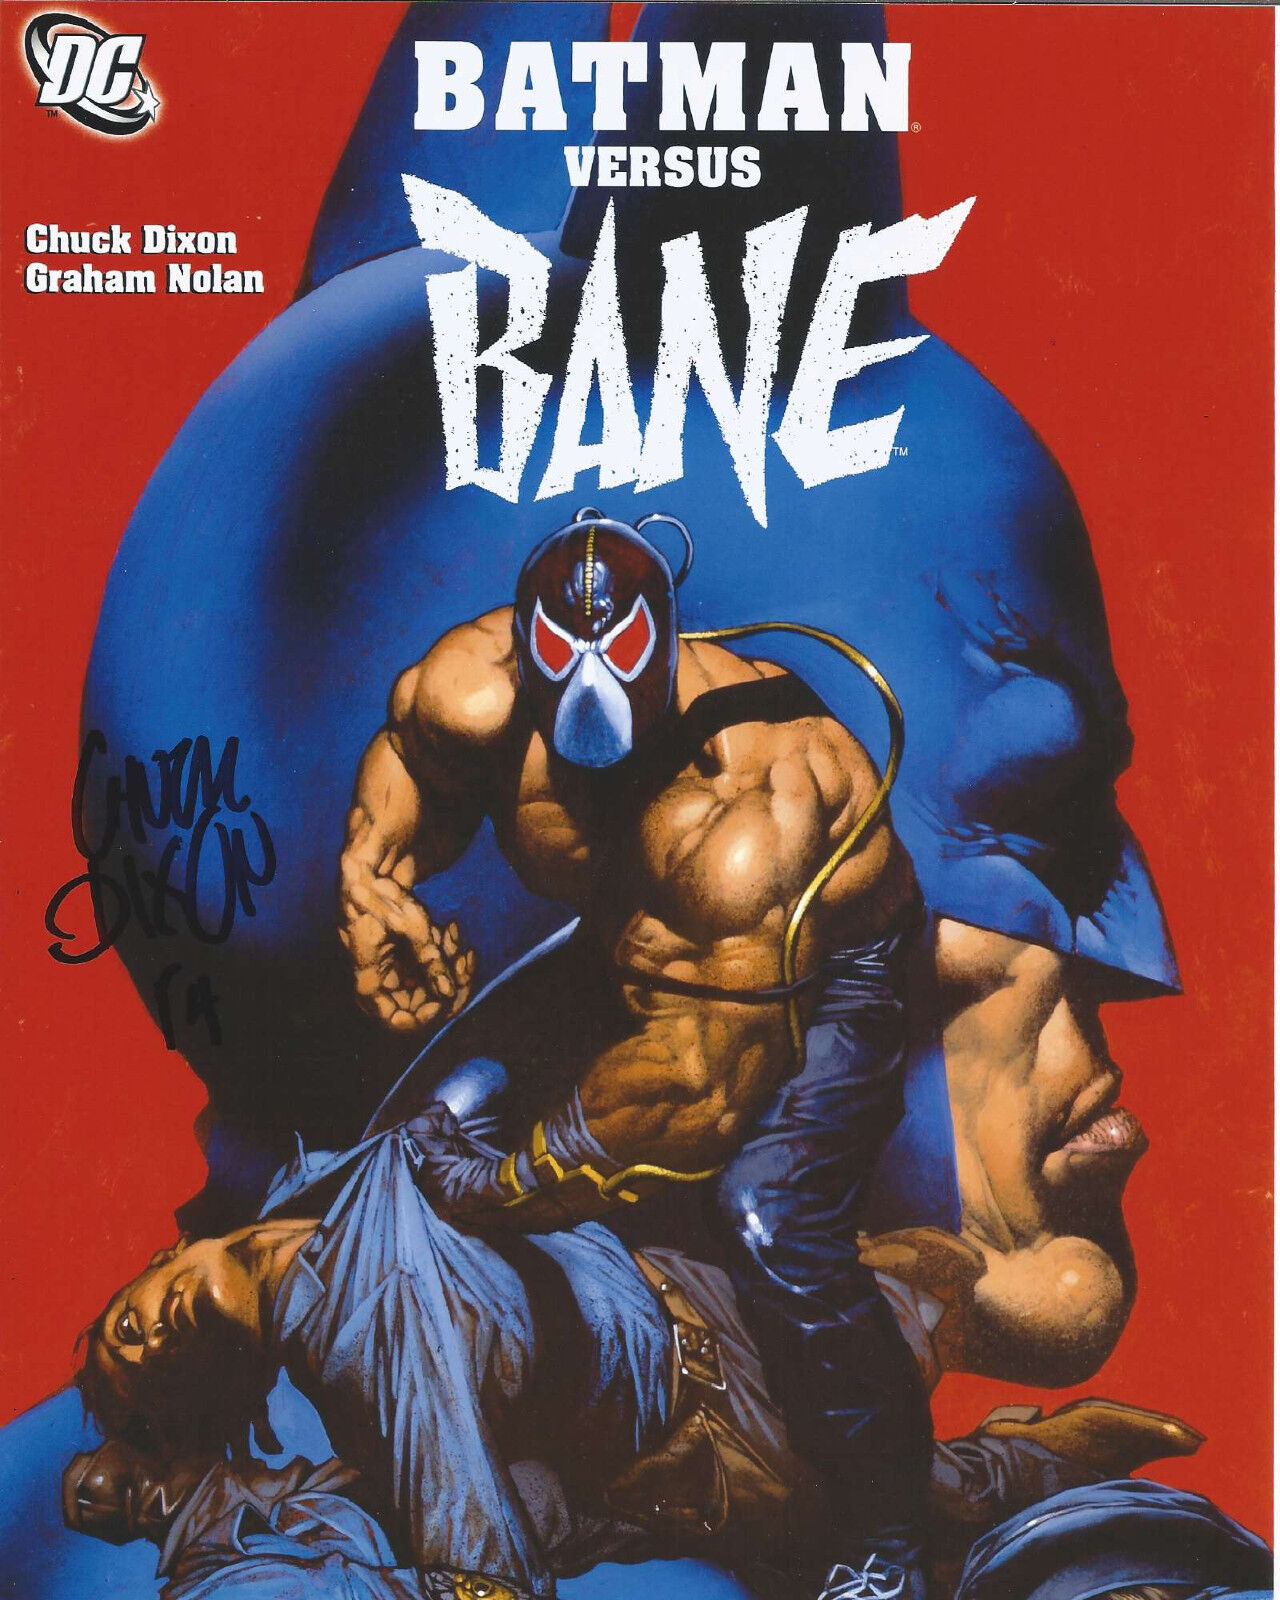 COMIC BOOK ARTIST ~ BANE CREATOR CHUCK DIXON SIGNED 8X10 Photo Poster painting B w/COA BATMAN